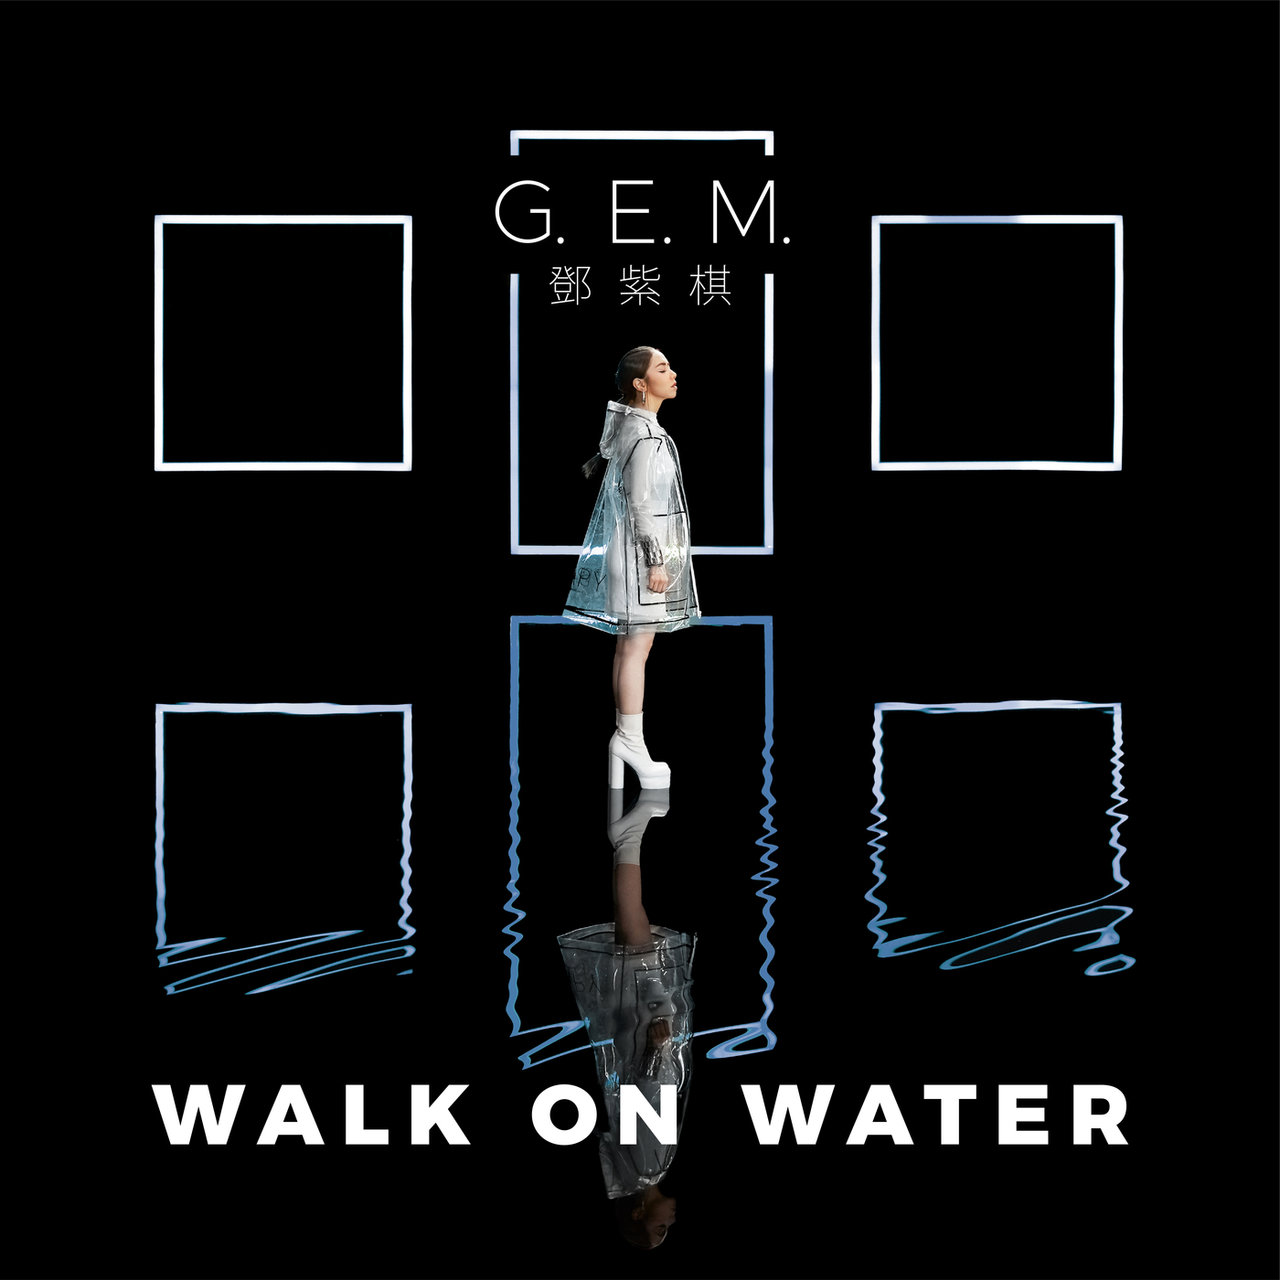 G.E.M. — WALK ON WATER cover artwork